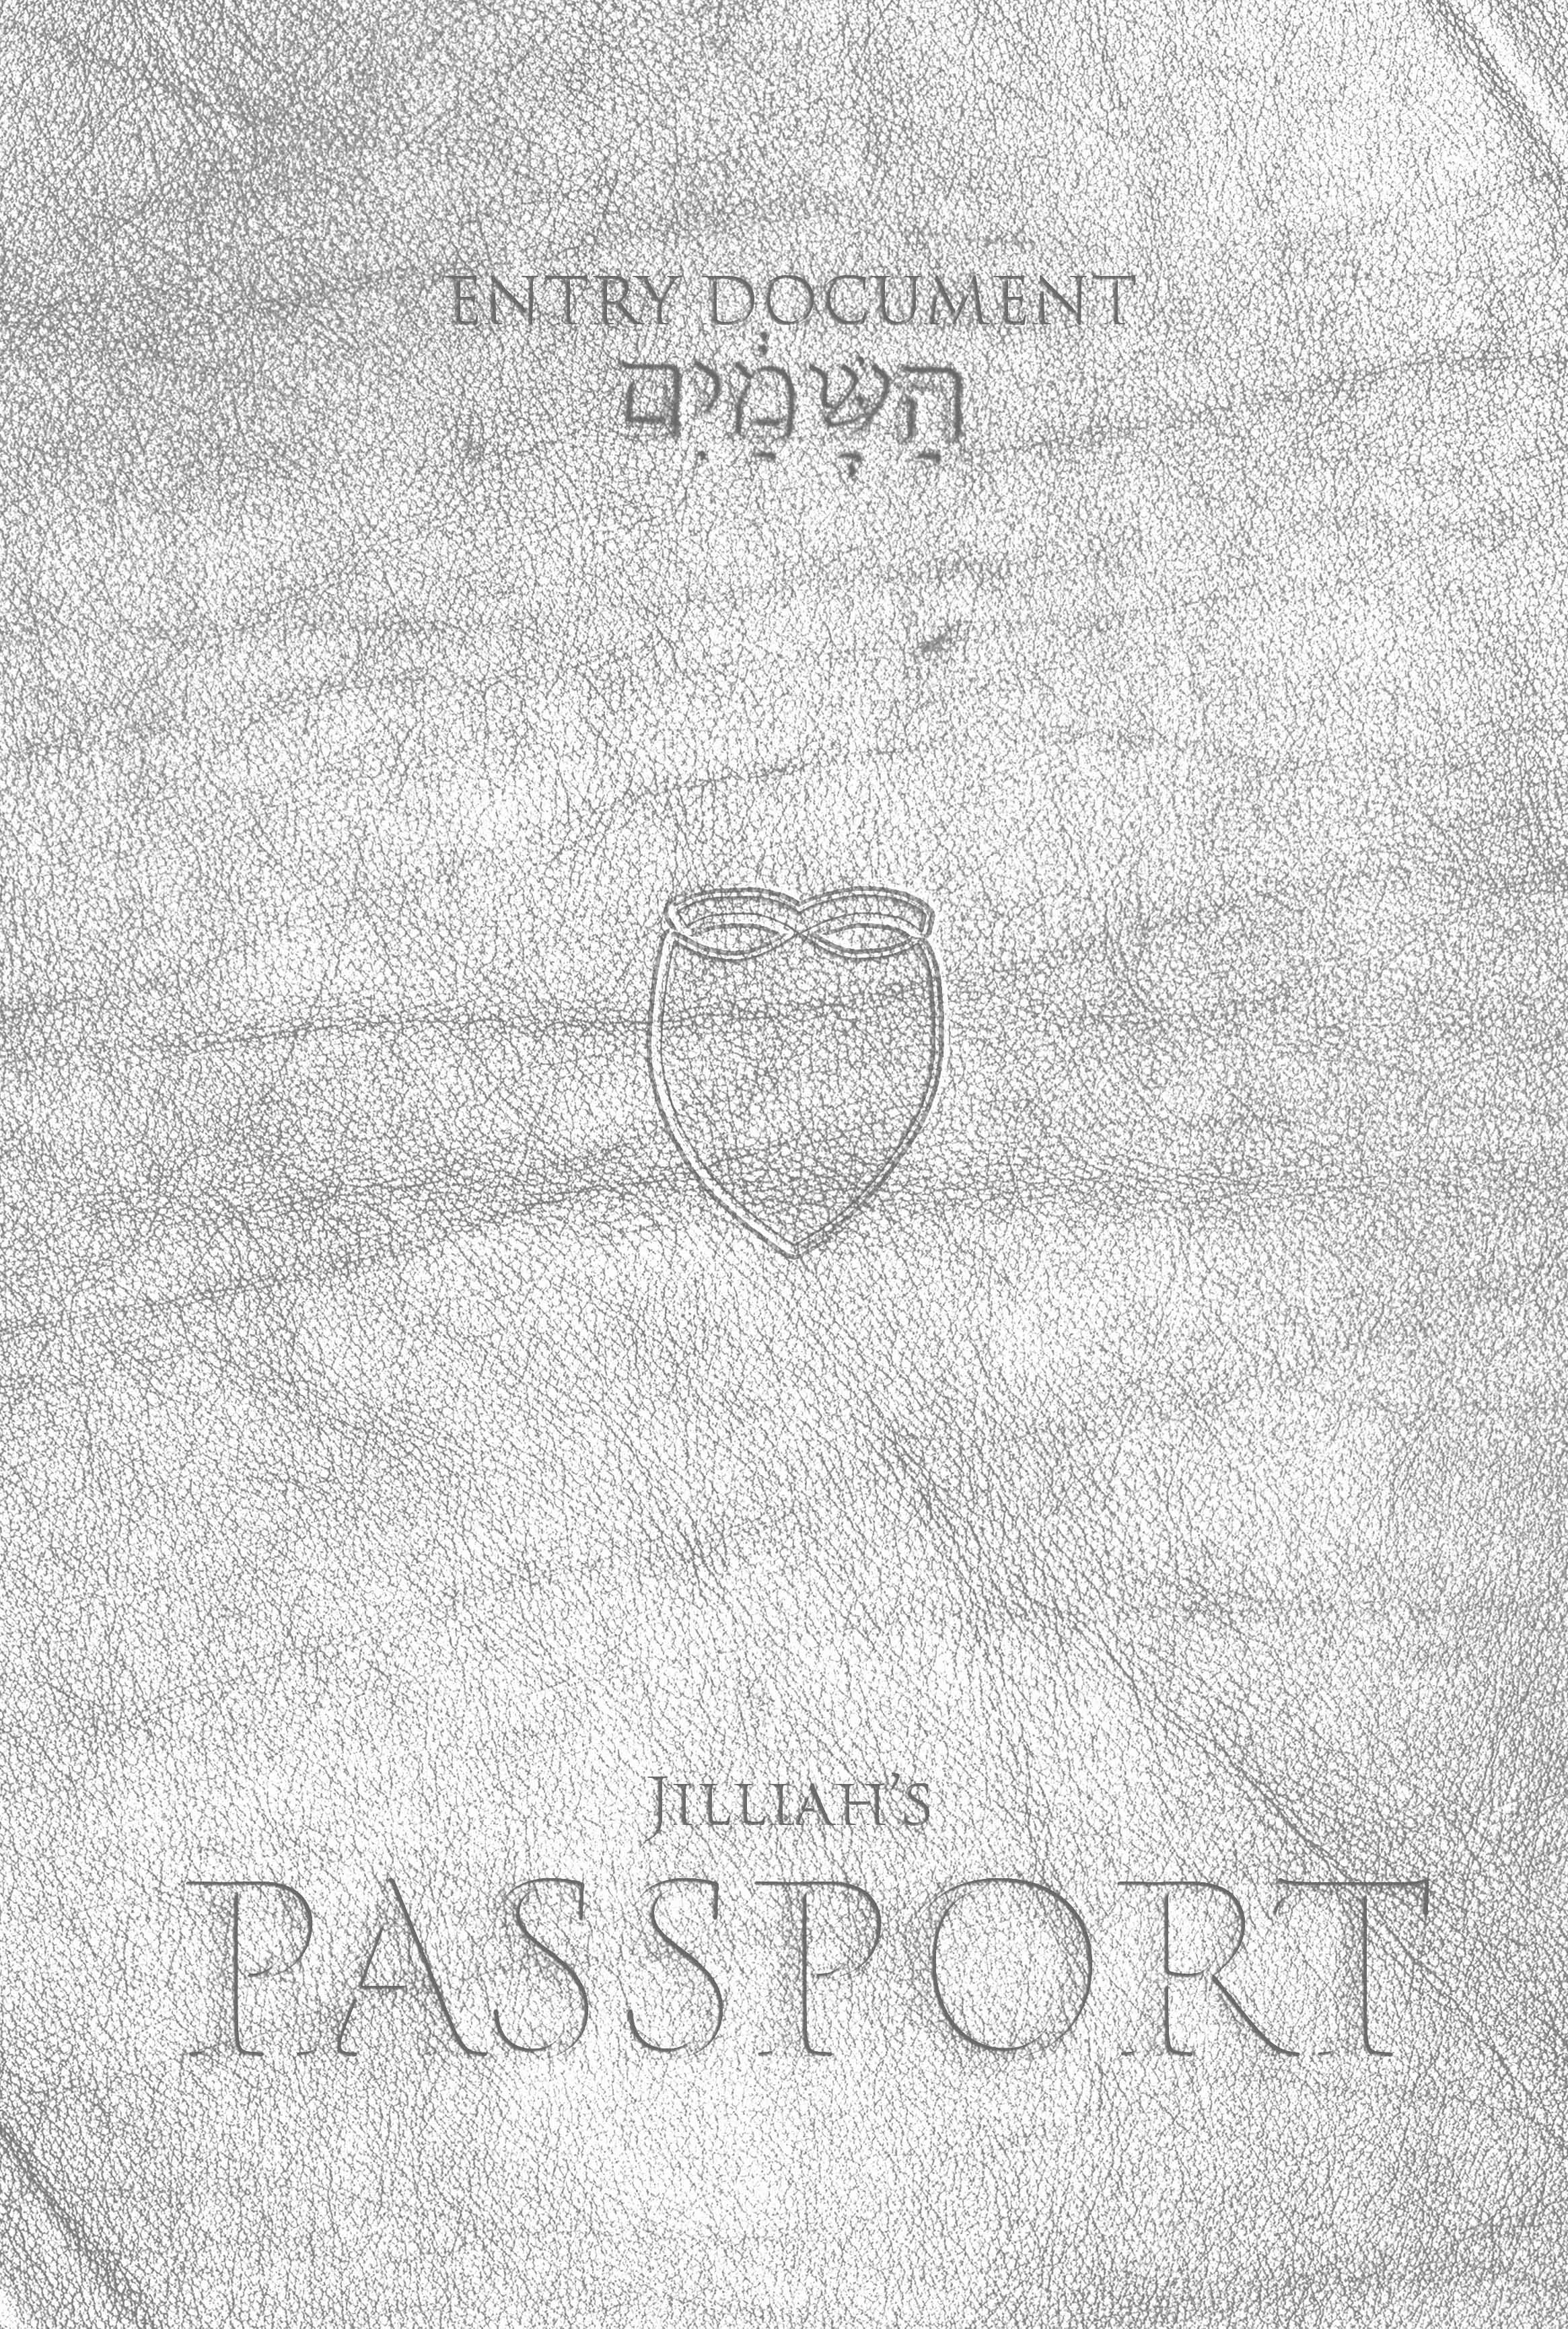 Jilliahsmen Trinity 2.5: Passport постер